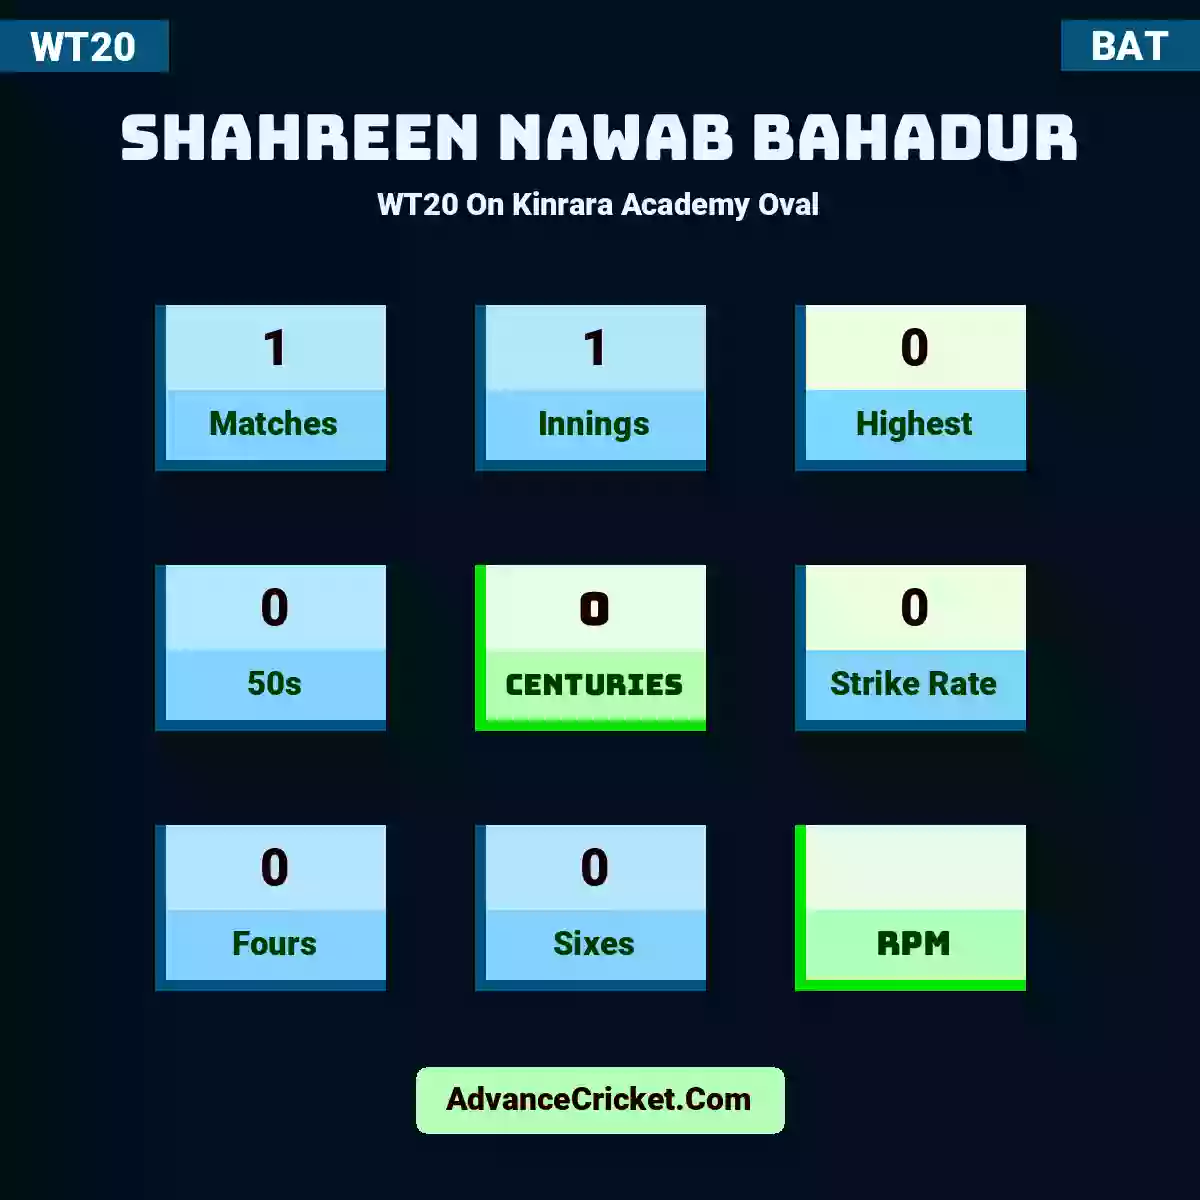 Shahreen Nawab Bahadur WT20  On Kinrara Academy Oval, Shahreen Nawab Bahadur played 1 matches, scored 0 runs as highest, 0 half-centuries, and 0 centuries, with a strike rate of 0. S.Nawab.Bahadur hit 0 fours and 0 sixes.